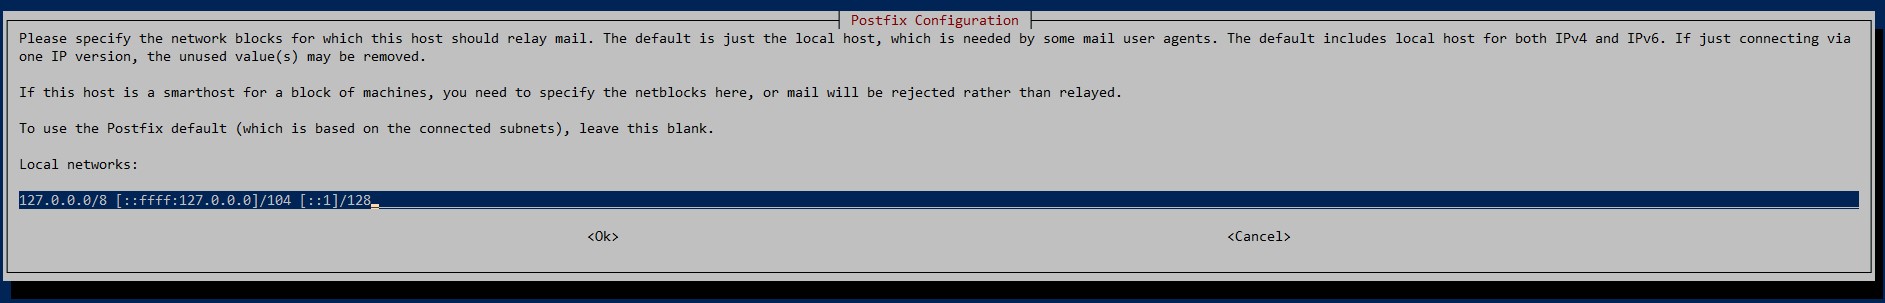 postfix configuration local networks default